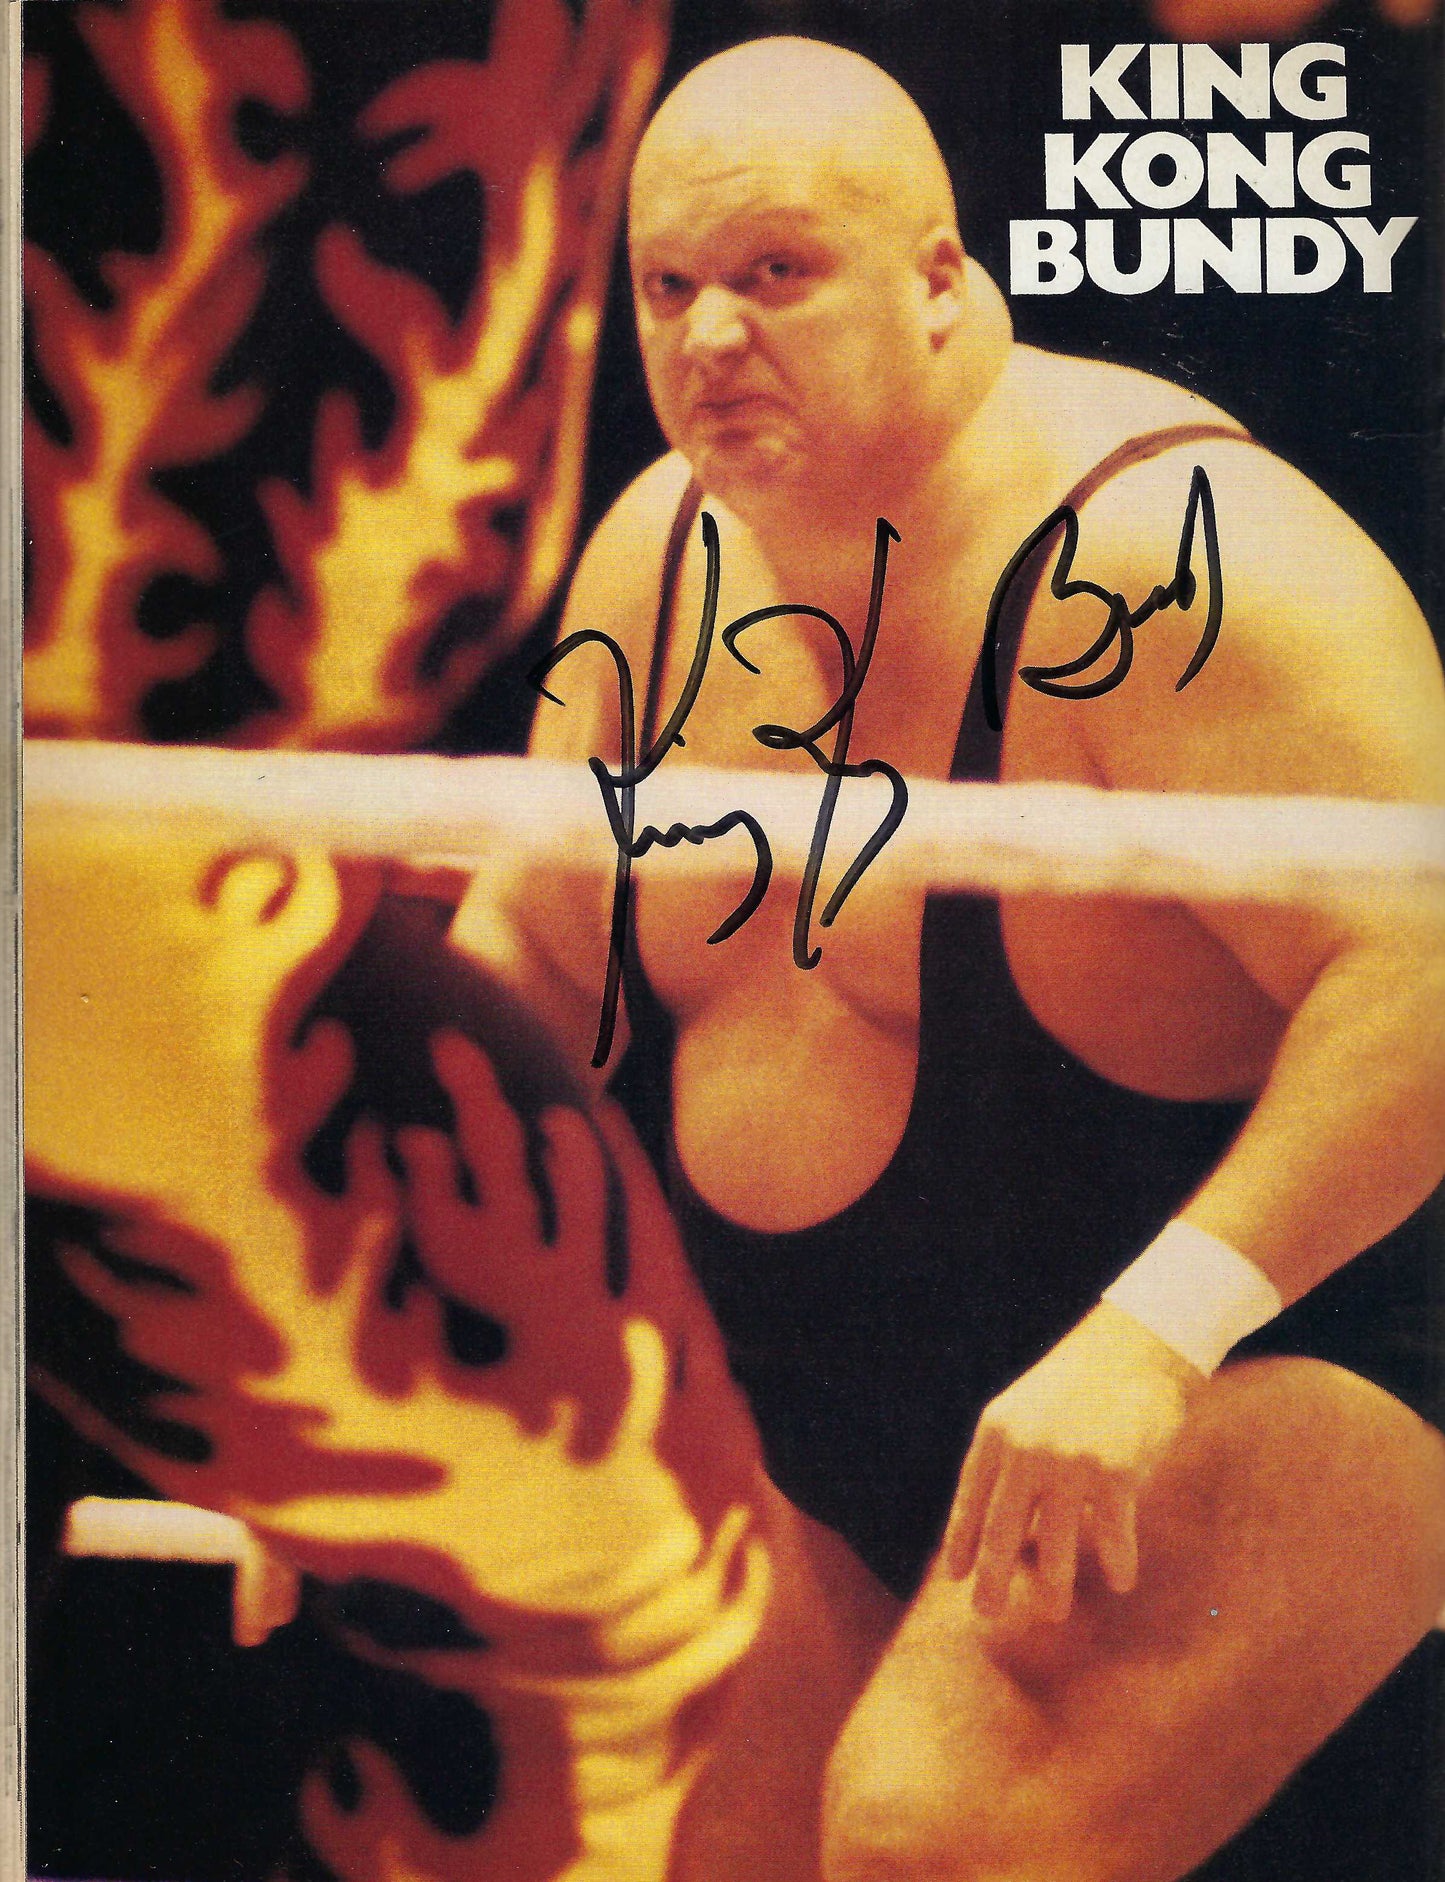 BD233   Hulk Hogan  Honky Tonk Man  King Kong Bundy  Road Warrior Animal   Autographed VERY RARE  Vintage Wrestling Magazine w/COA